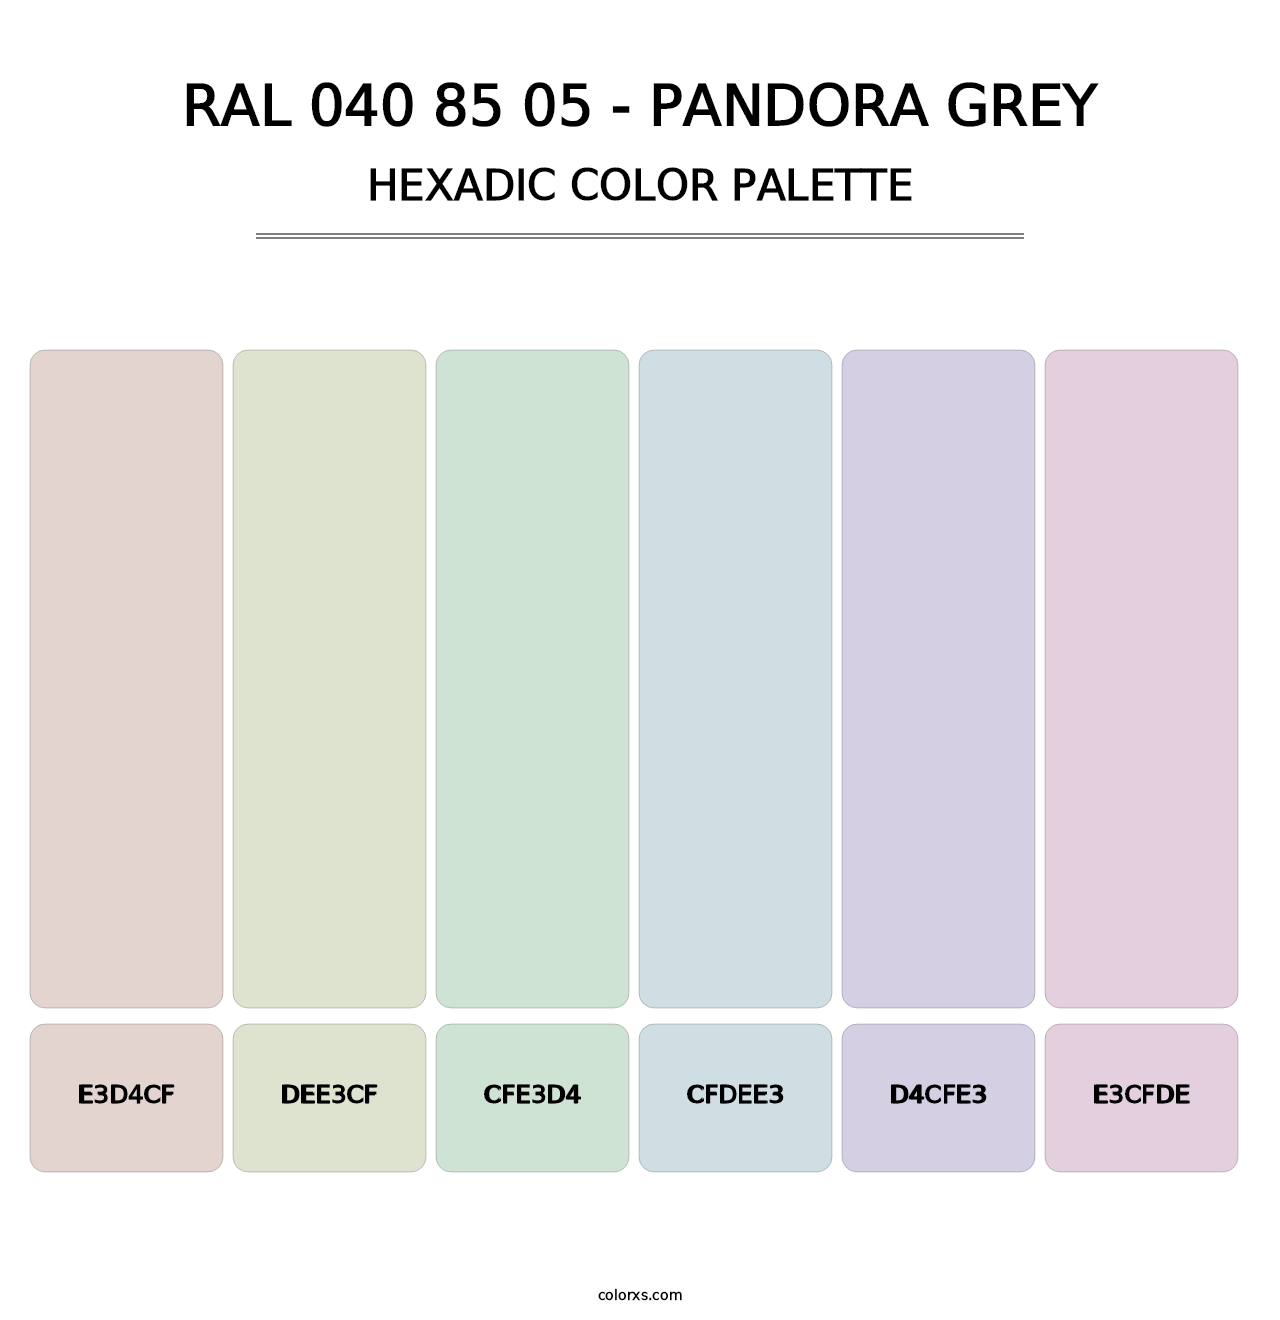 RAL 040 85 05 - Pandora Grey - Hexadic Color Palette